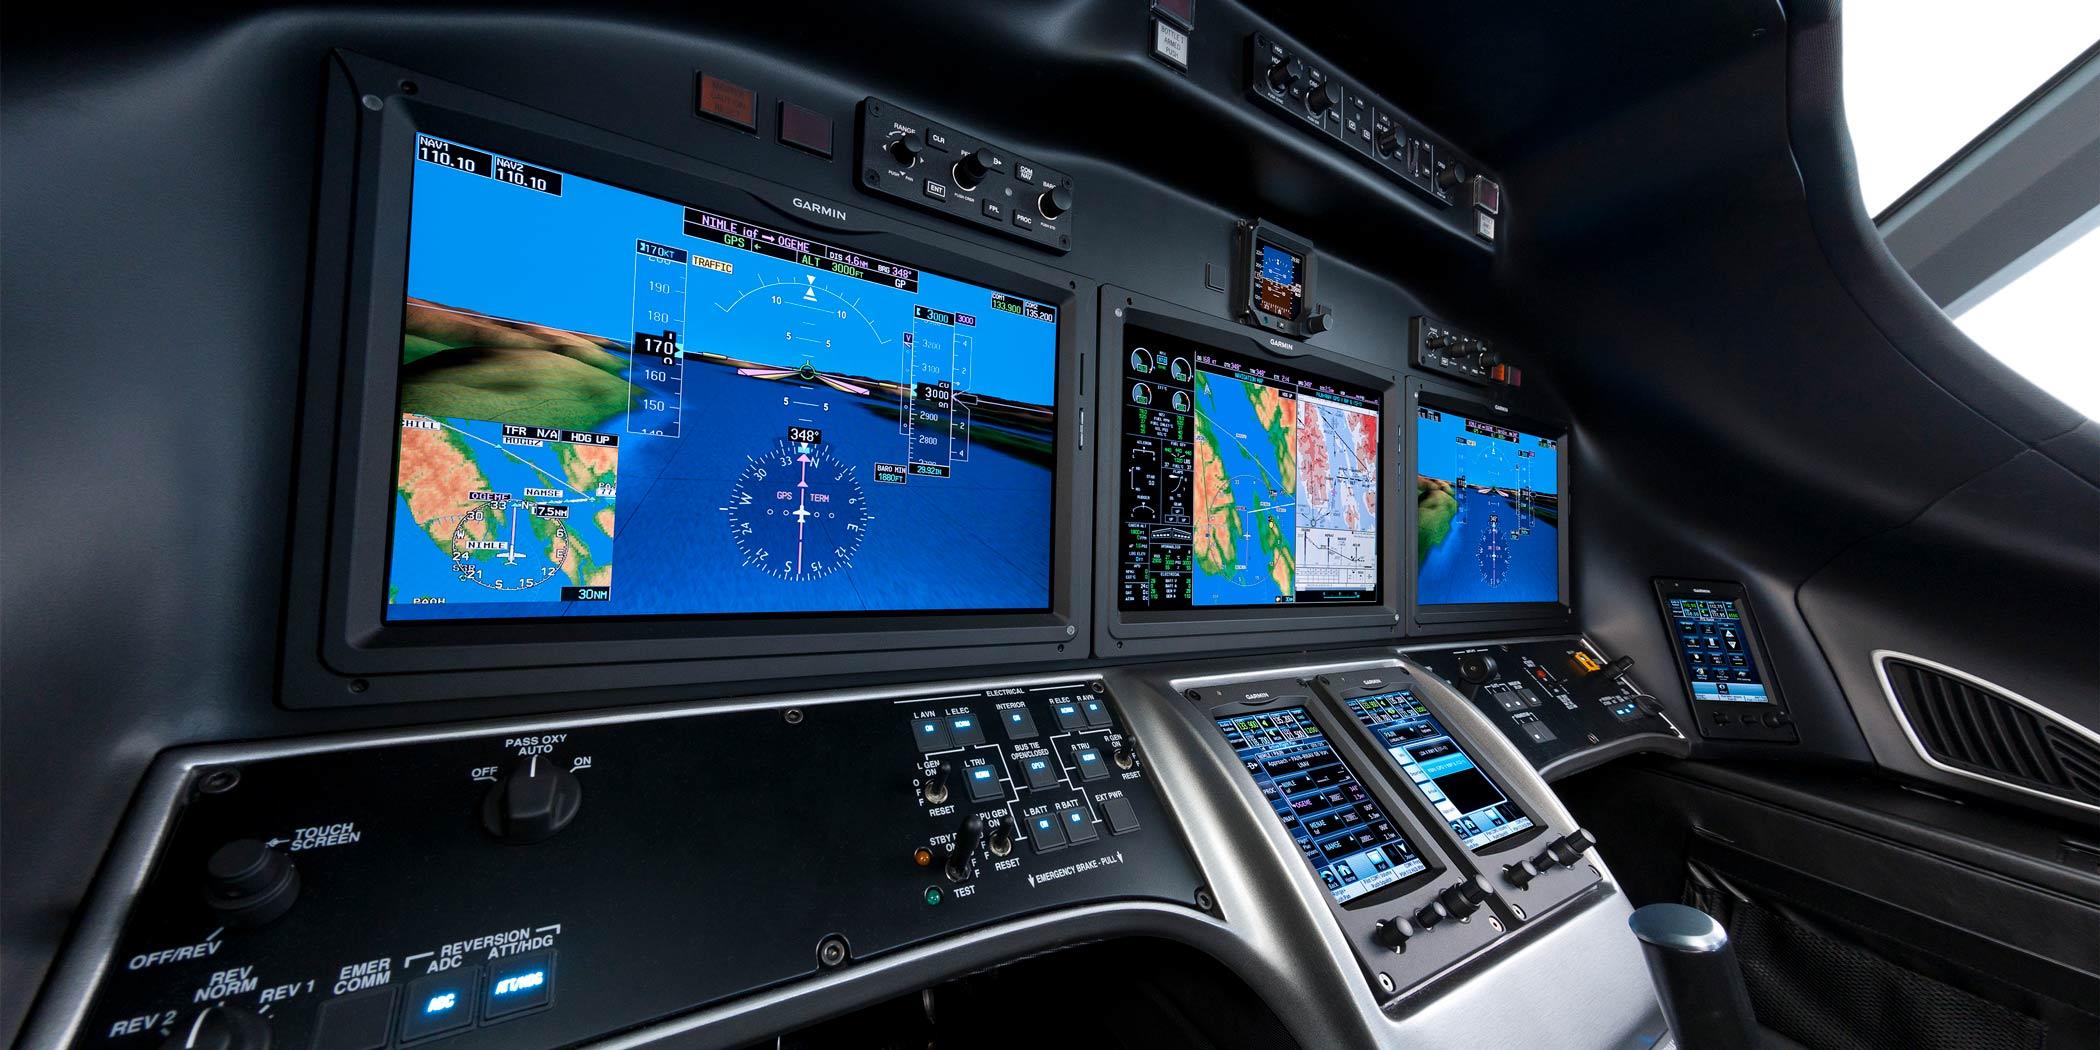 The Garmin G500 avionics suite within the cockpit of the Cessna Citation X+